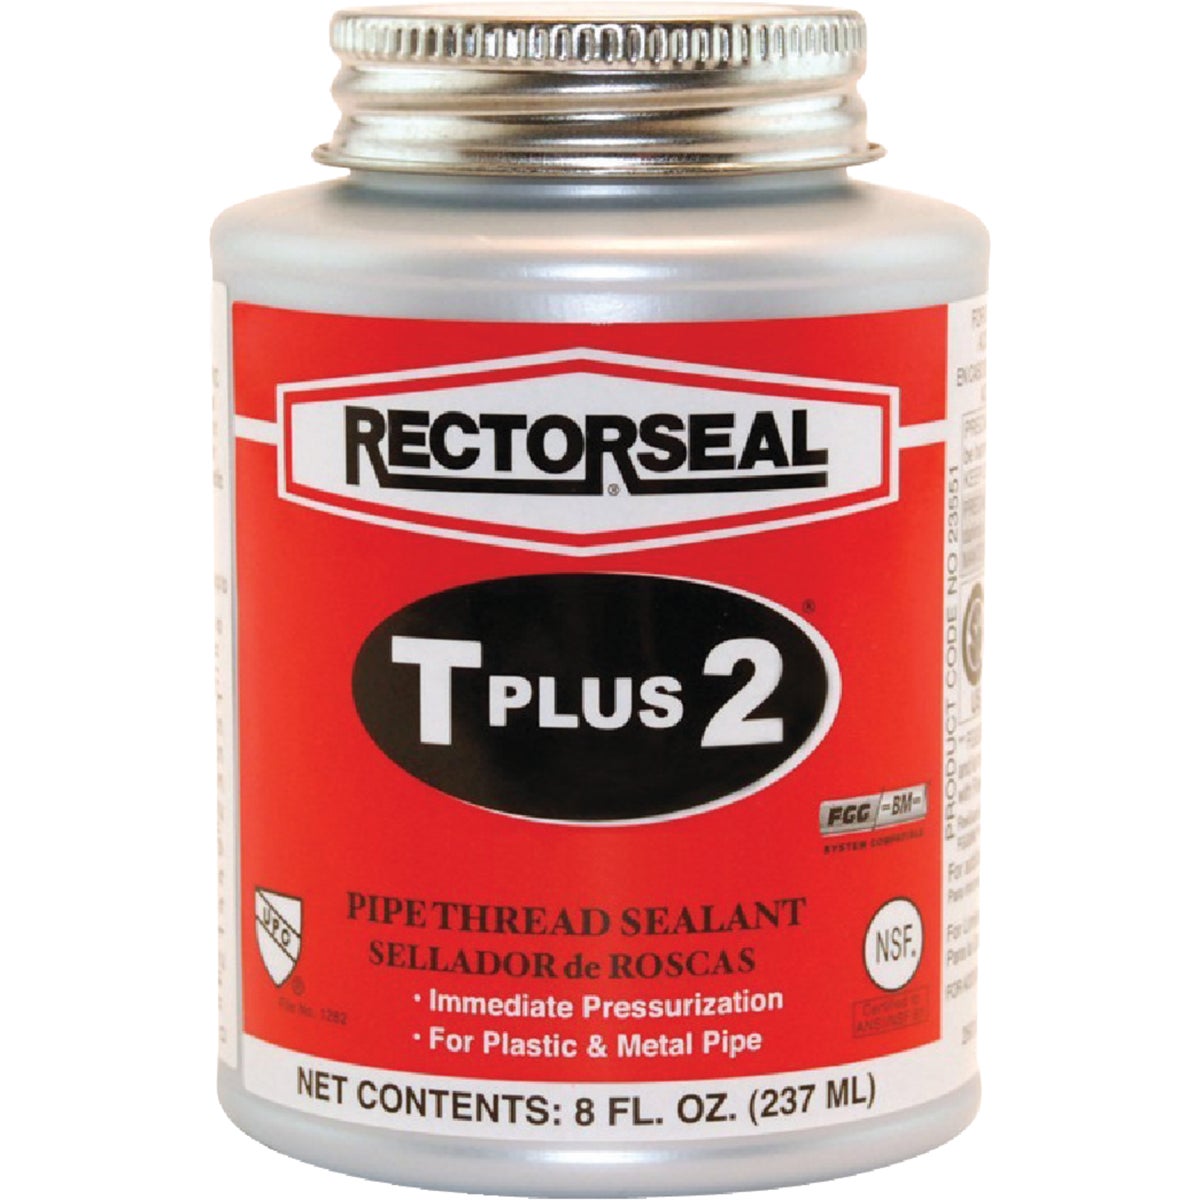 Rectorseal T Plus 8 Oz. White Pipe Thread Sealant with PTFE